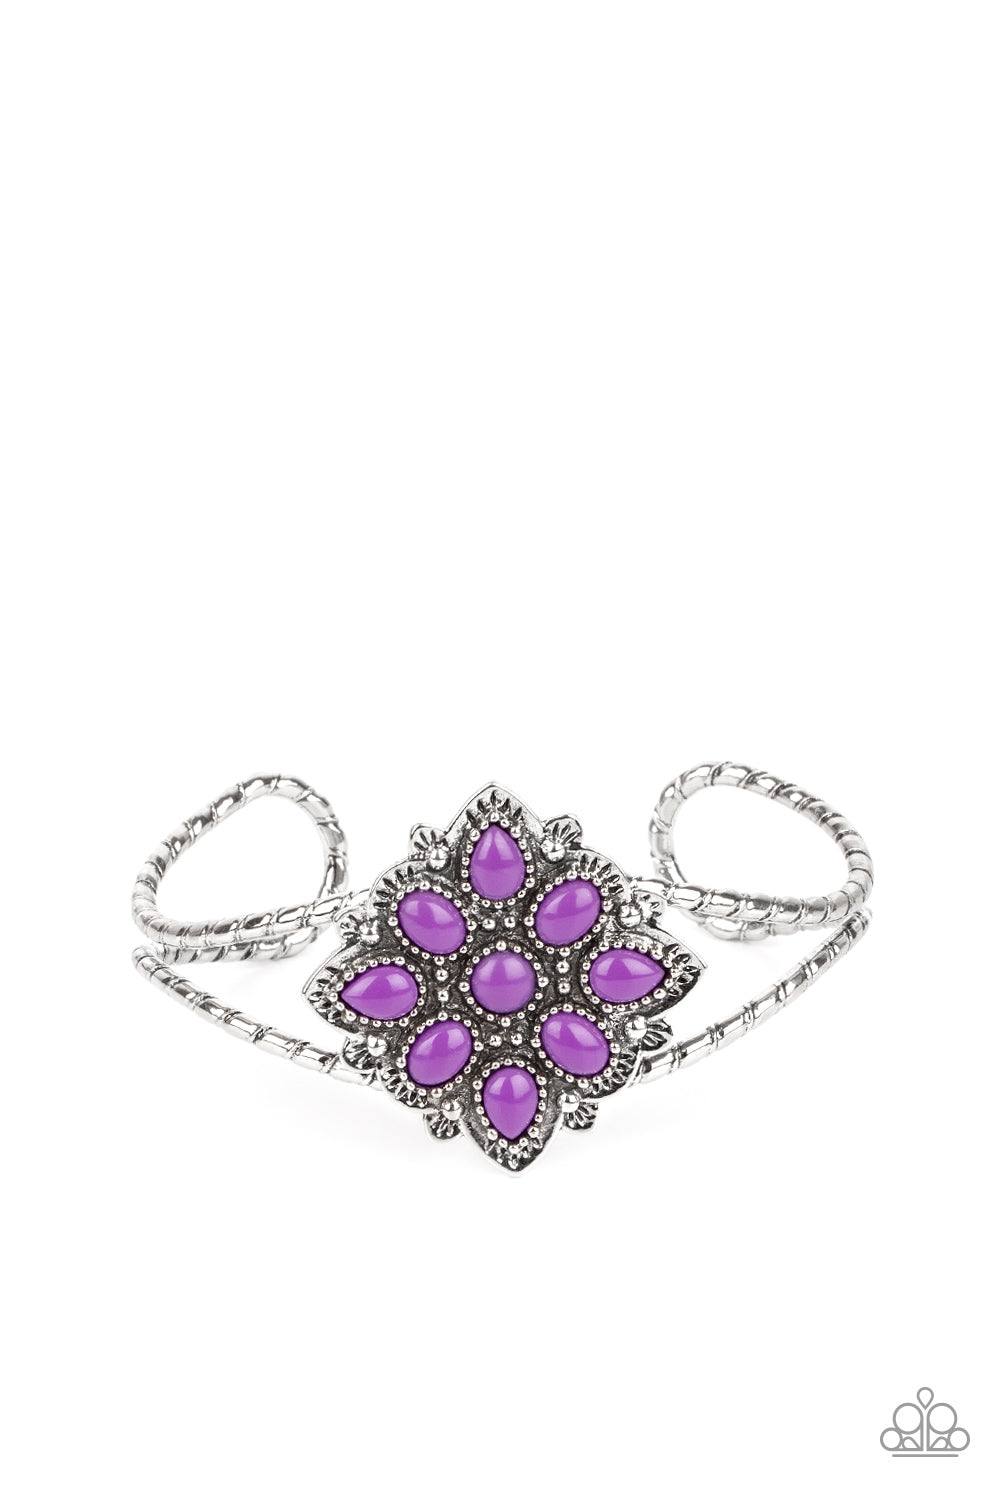 Happily Ever APPLIQUE - Purple Bracelet freeshipping - JewLz4u Gemstone Gallery